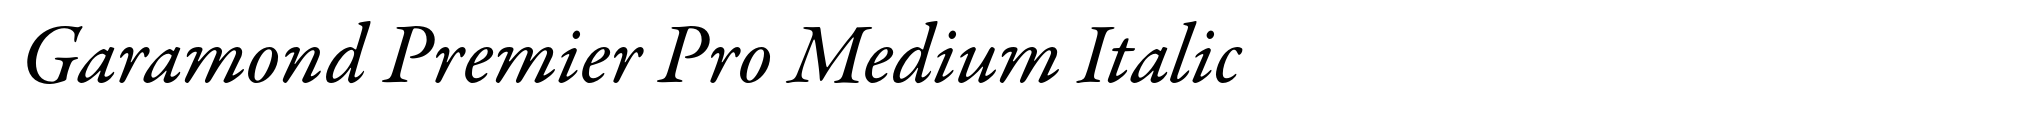 Garamond Premier Pro Medium Italic image